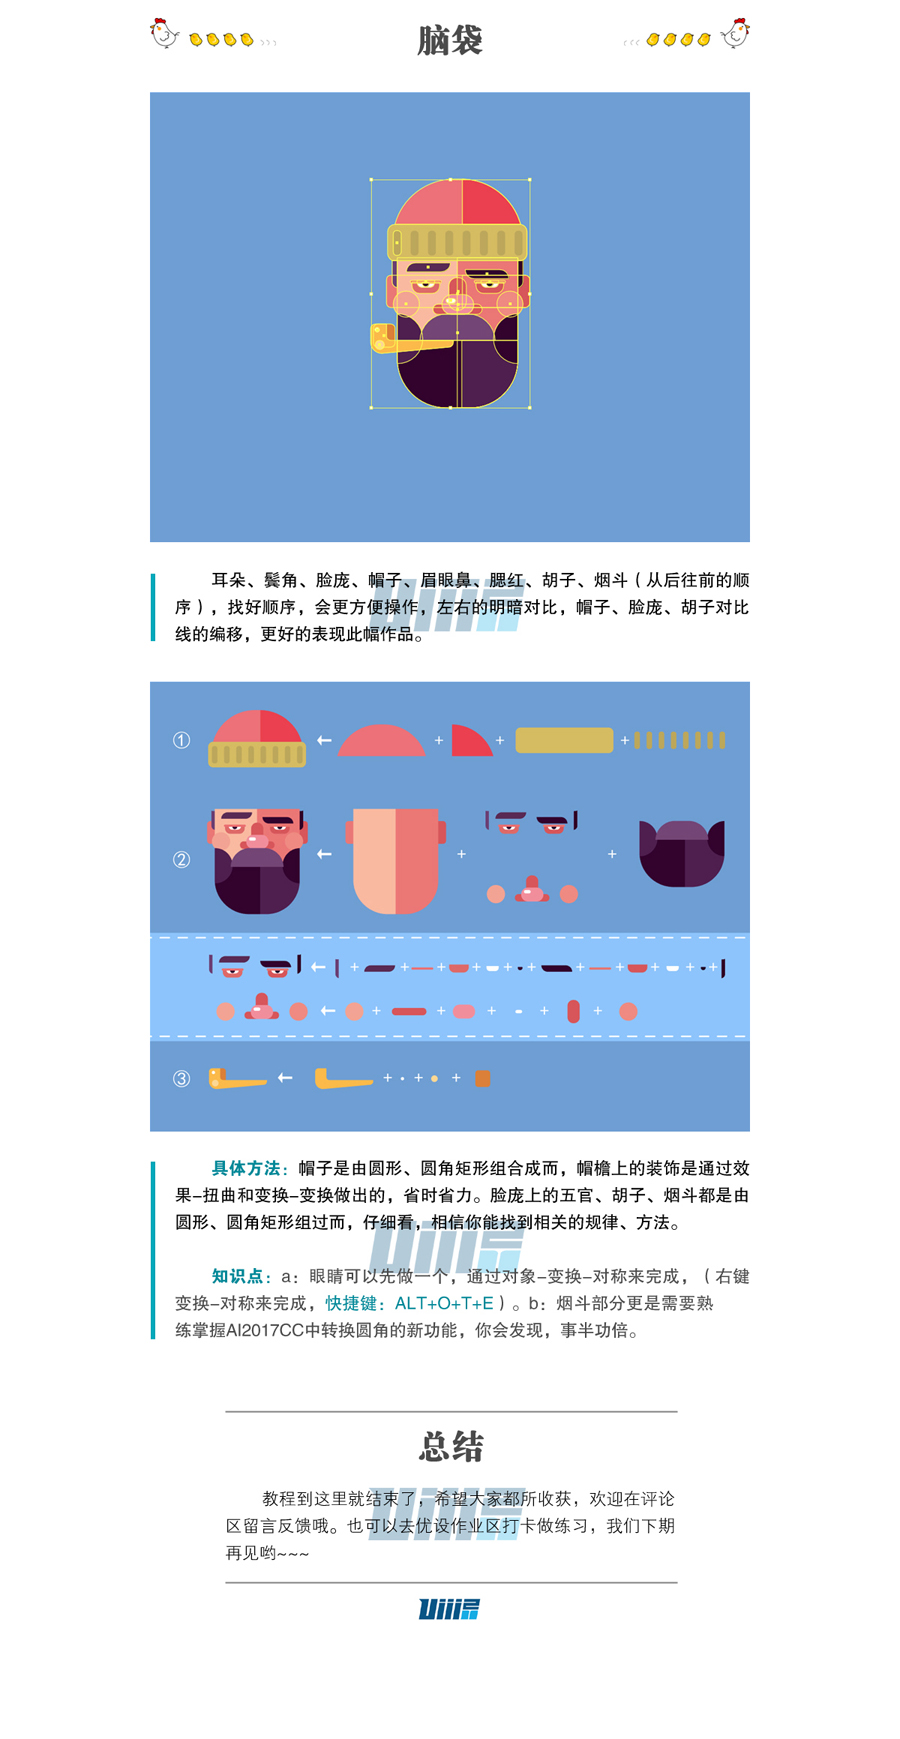 Illustrator用简单形状绘制扁平人像插画,PS教程,素材中国网